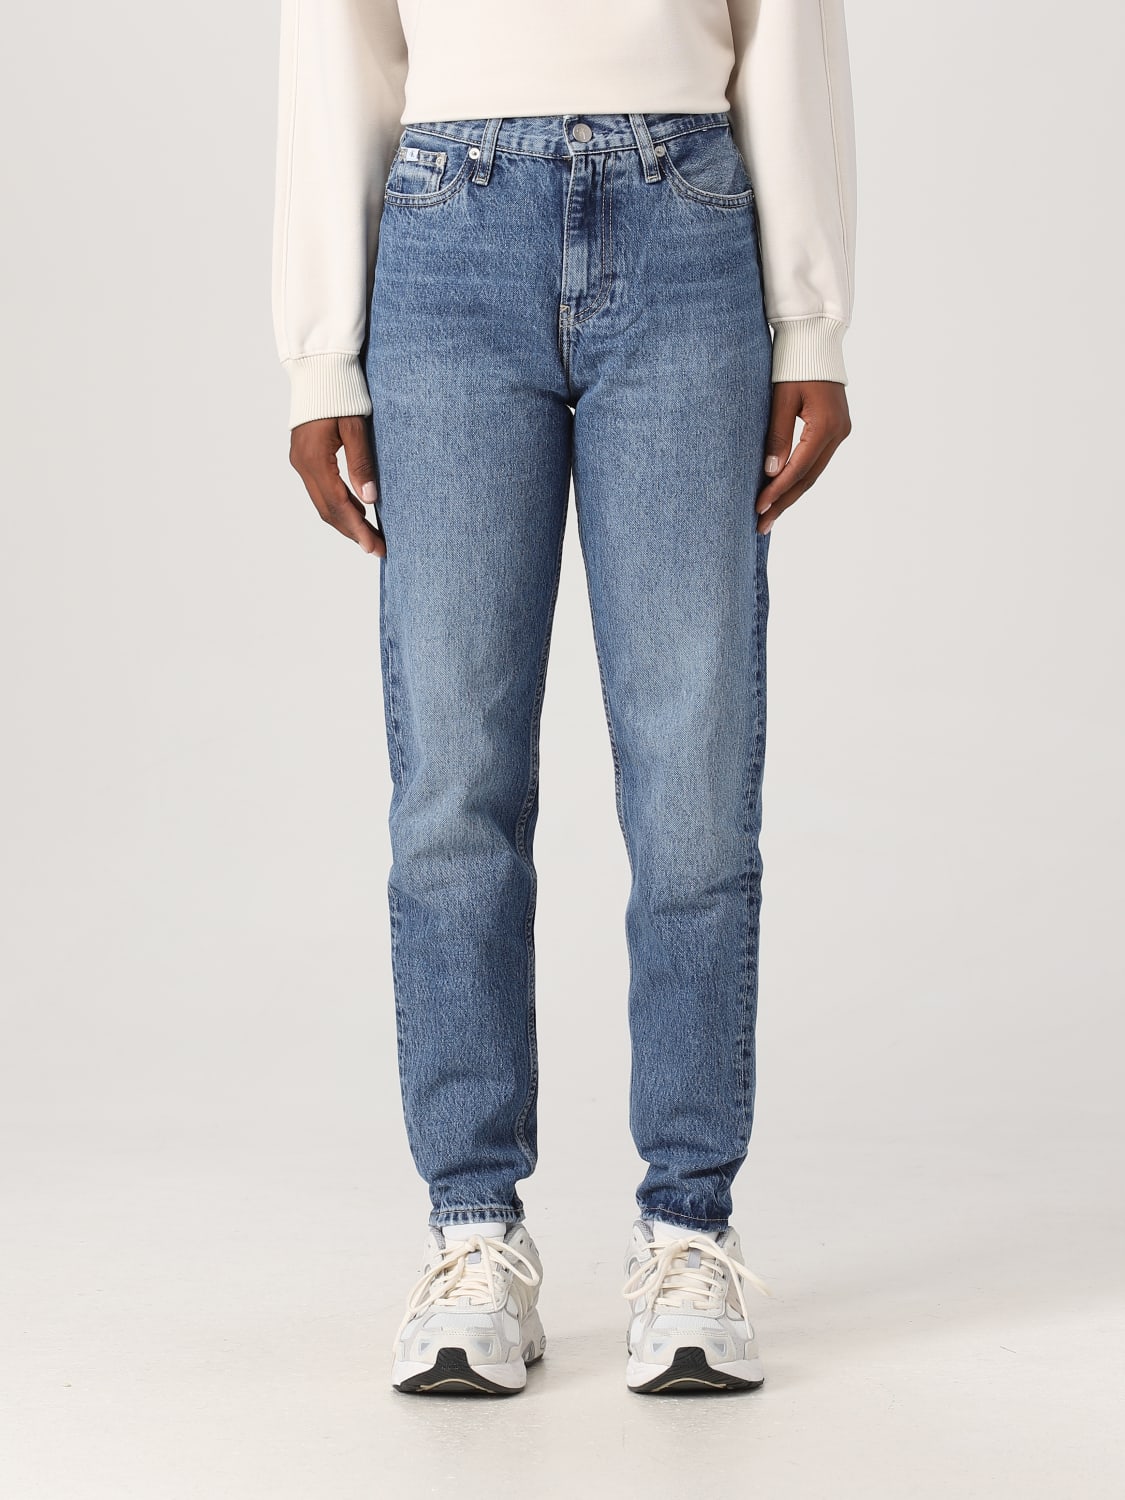 CALVIN KLEIN JEANS: Jeans woman - Denim | CALVIN KLEIN JEANS jeans